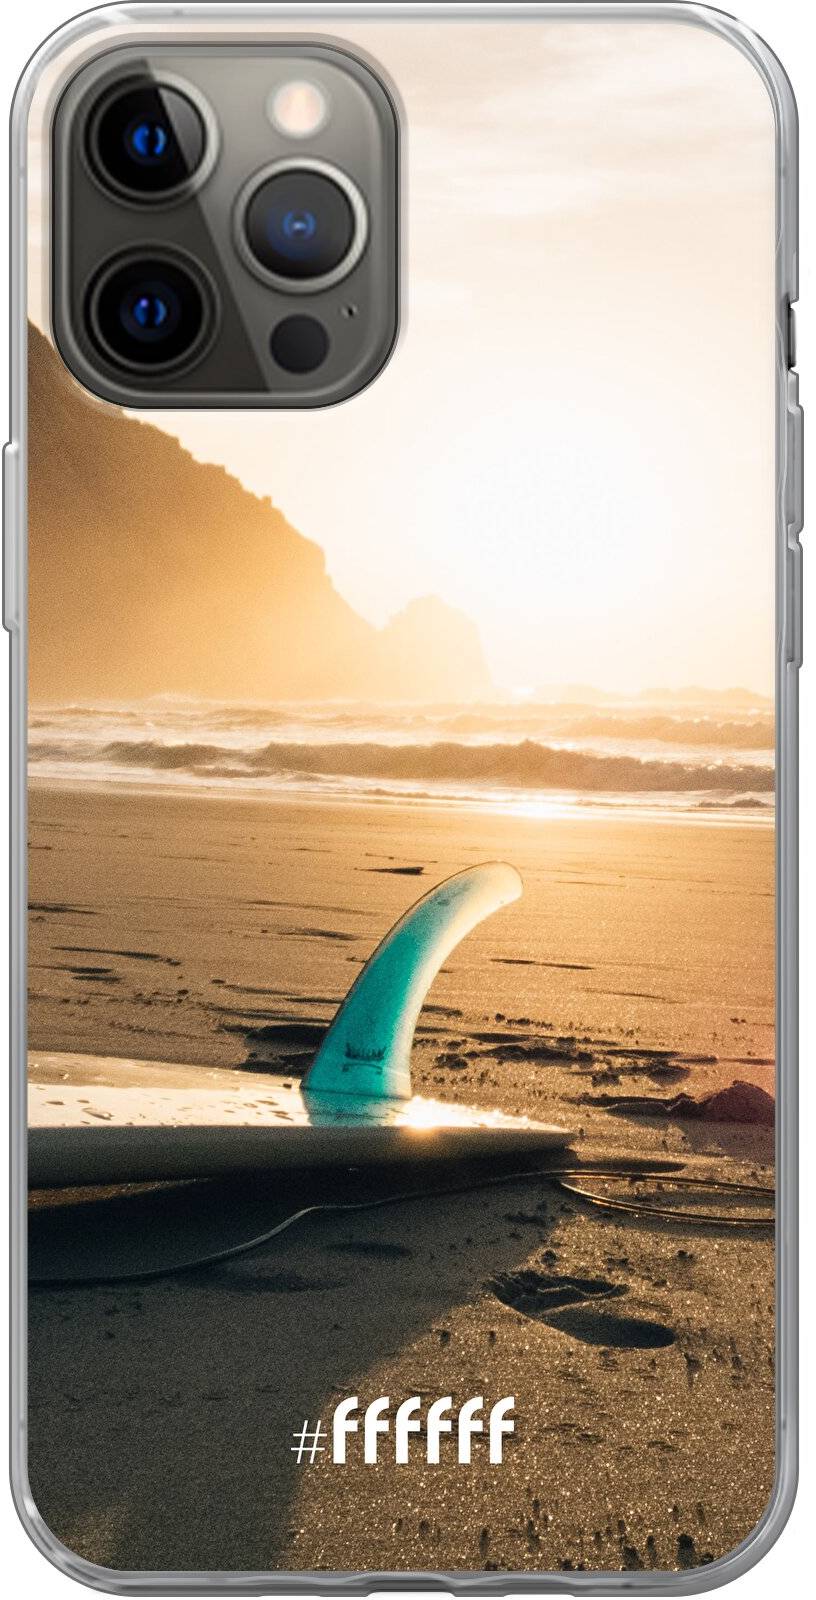 Sunset Surf iPhone 12 Pro Max